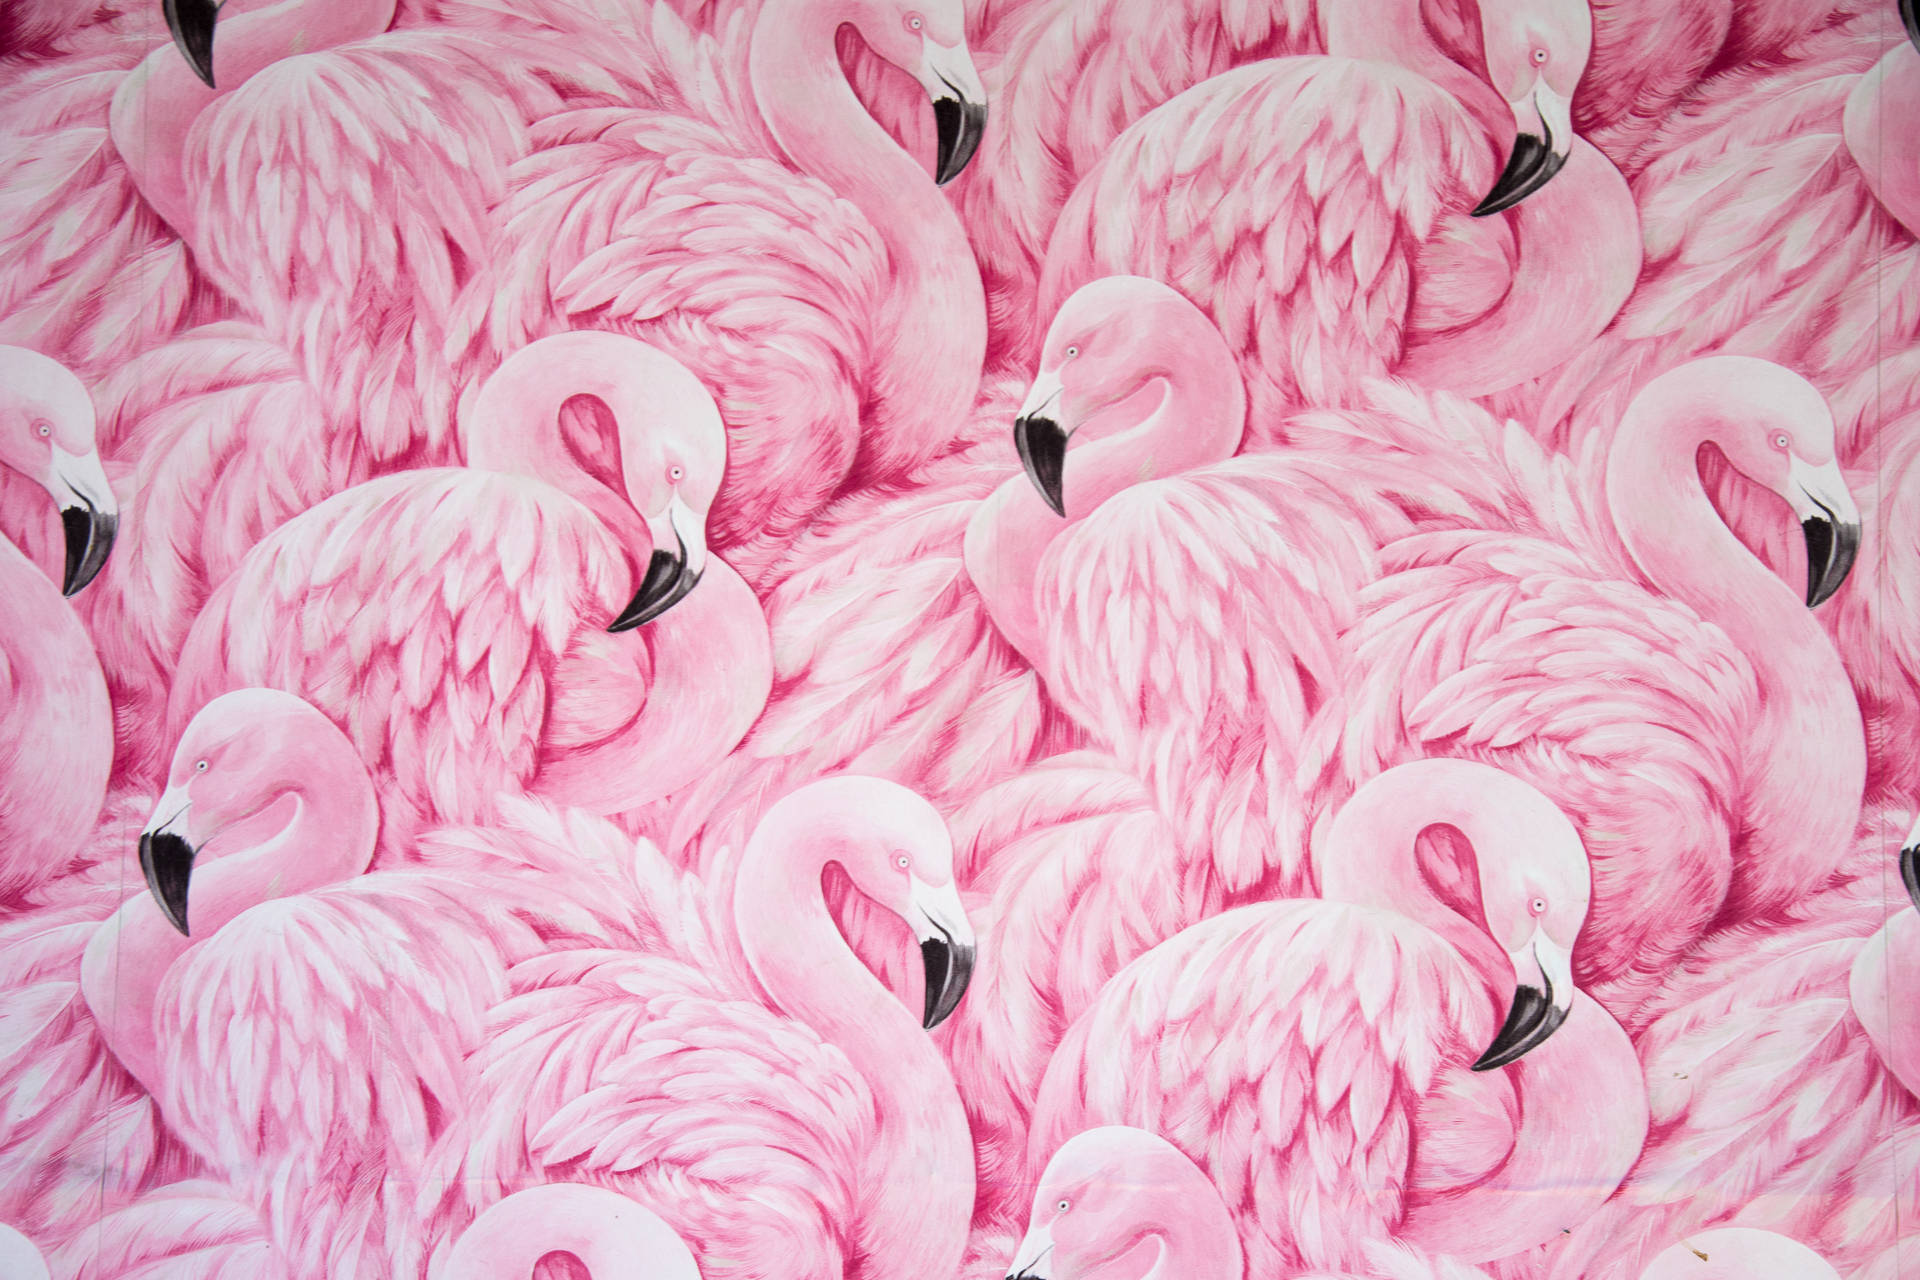 Pink 5568X3712 wallpaper